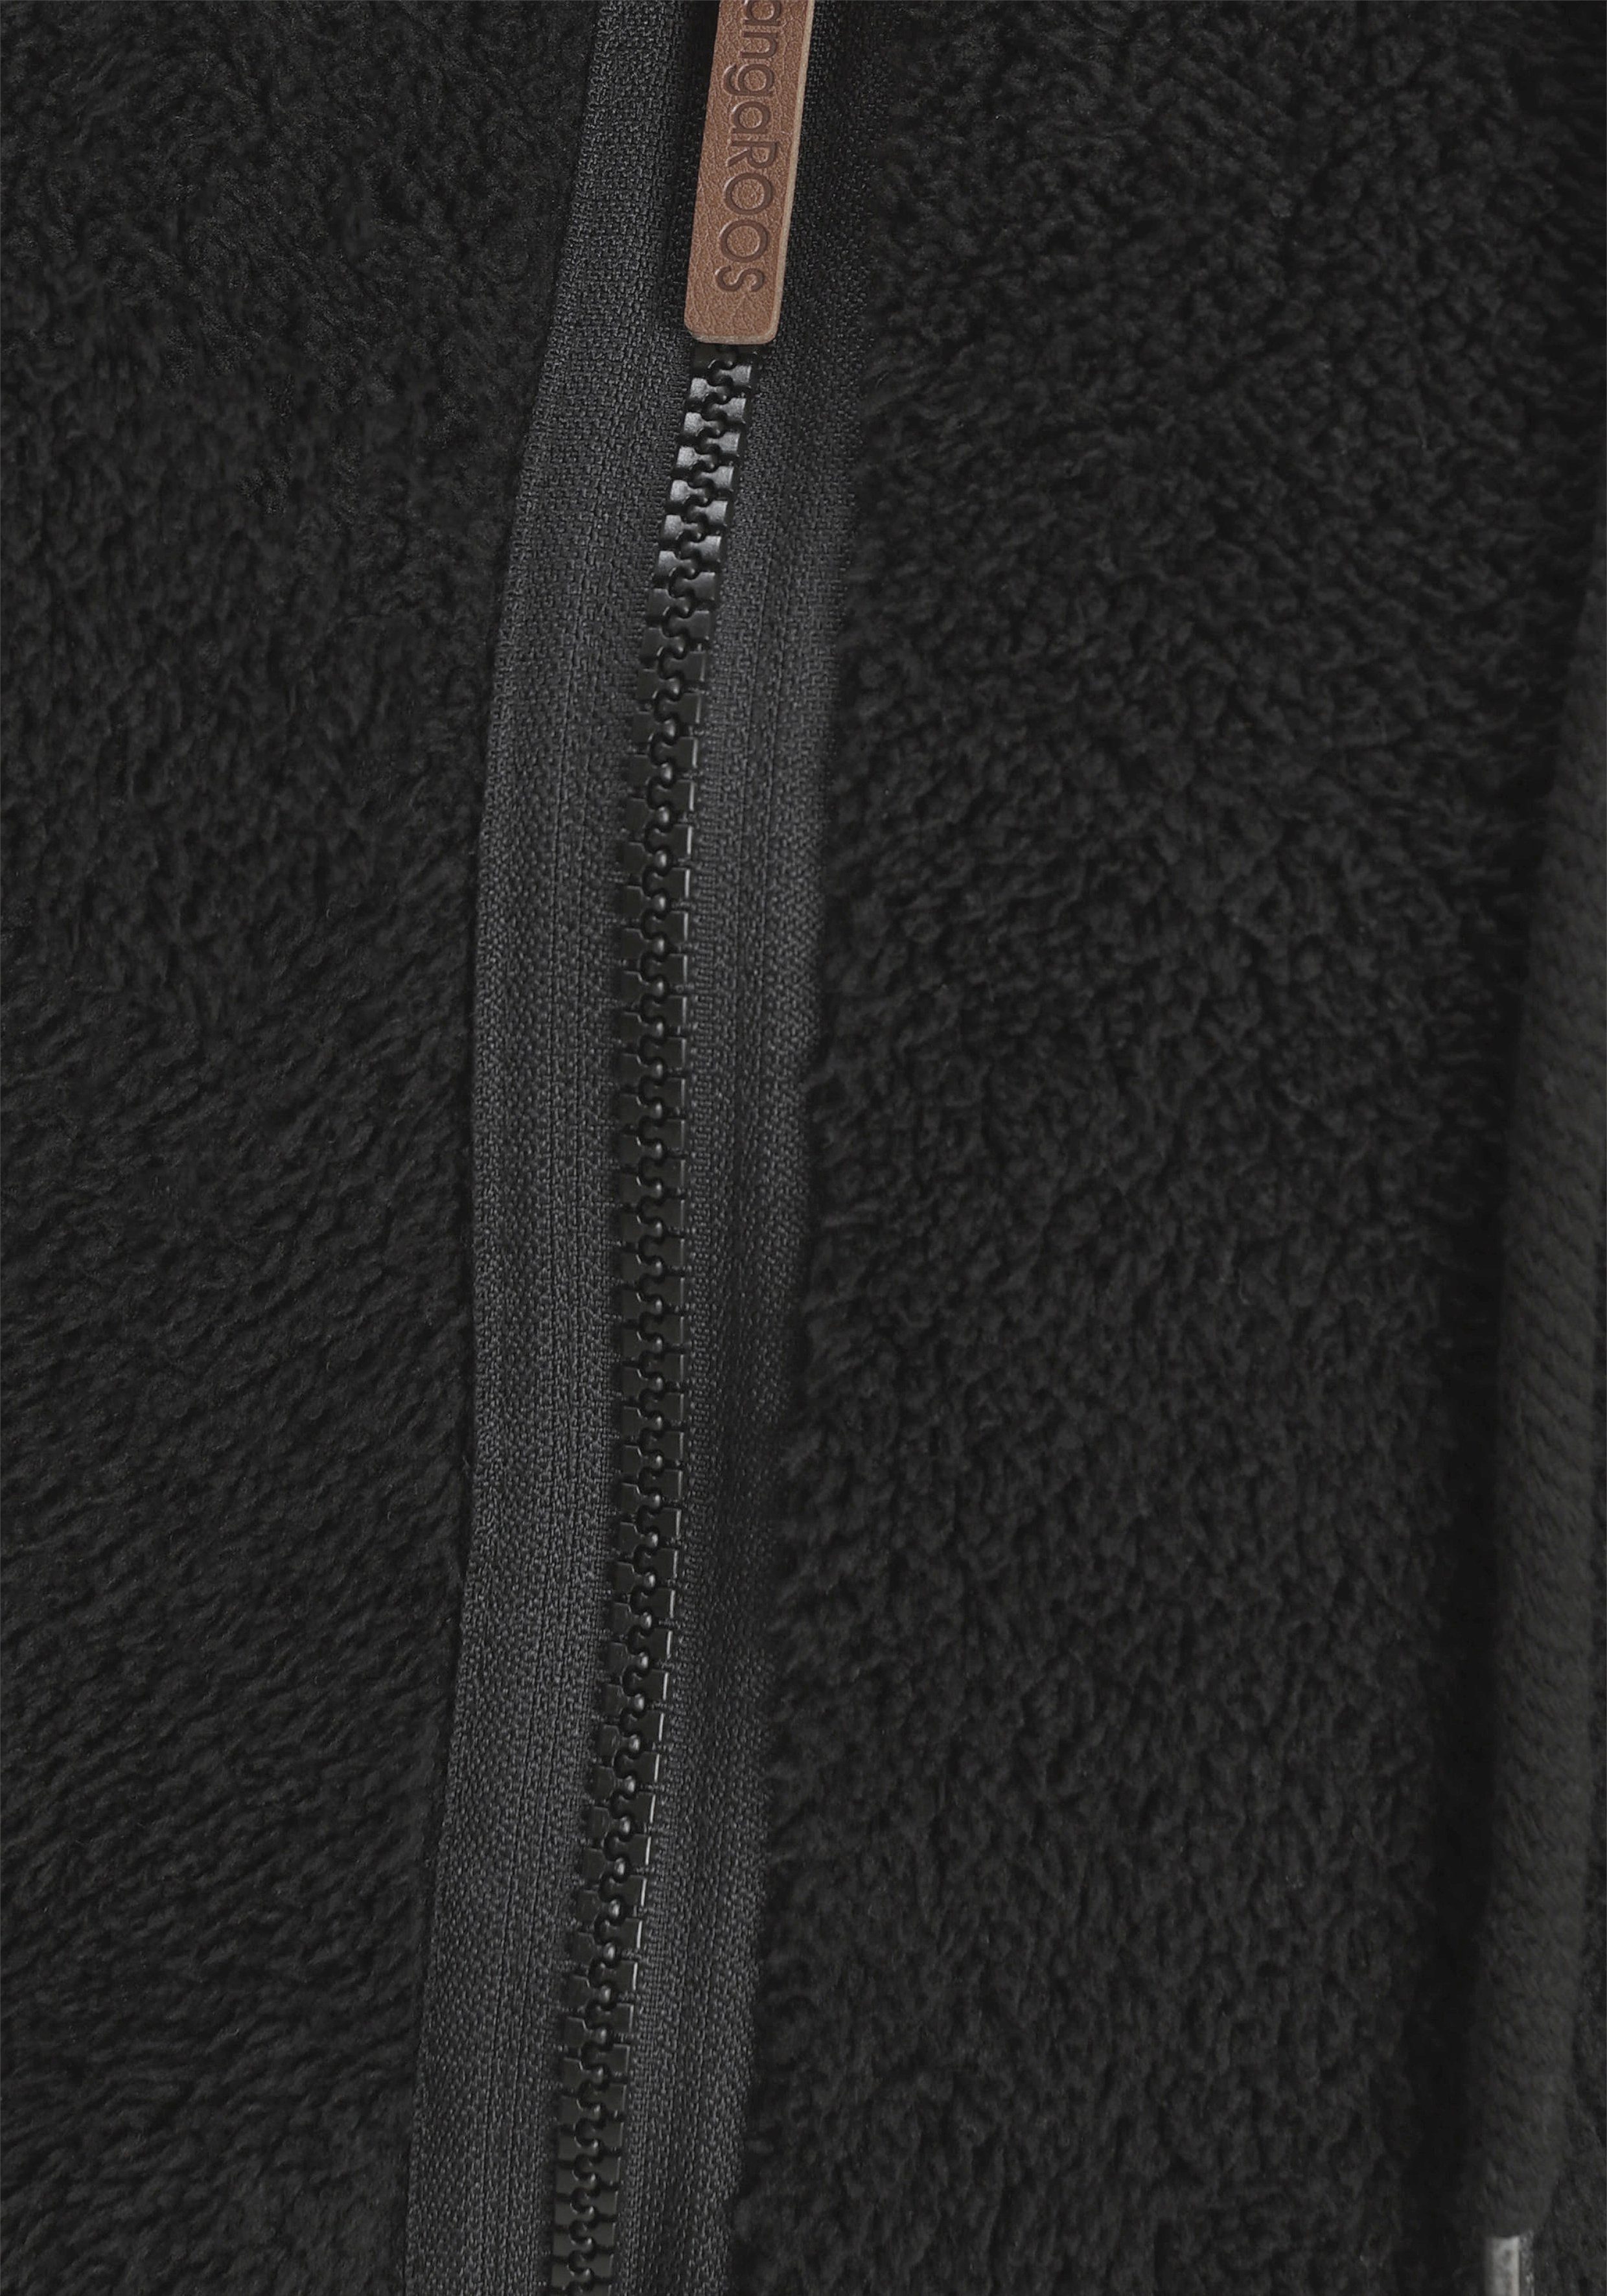 Sweatjacke schwarz aus flauschigem KangaROOS Teddy-Fleece